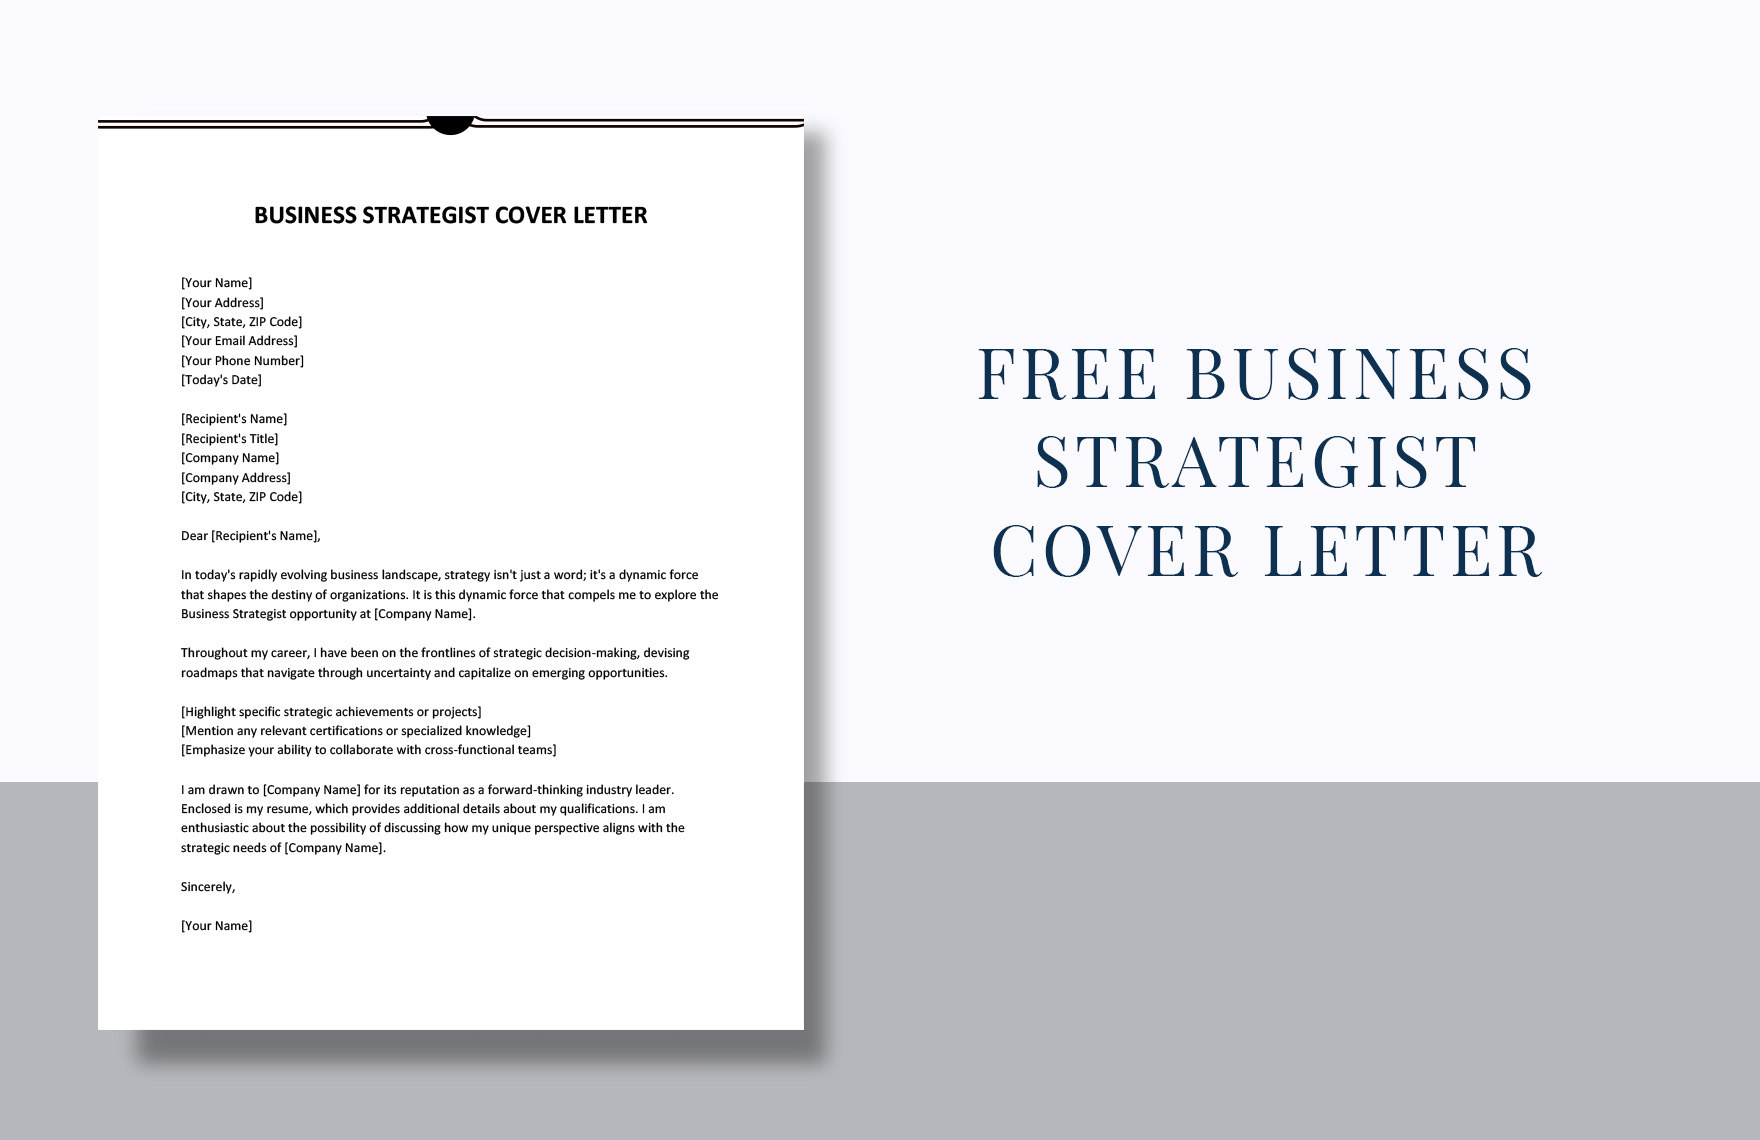 Business Strategist Cover Letter in Word, Google Docs